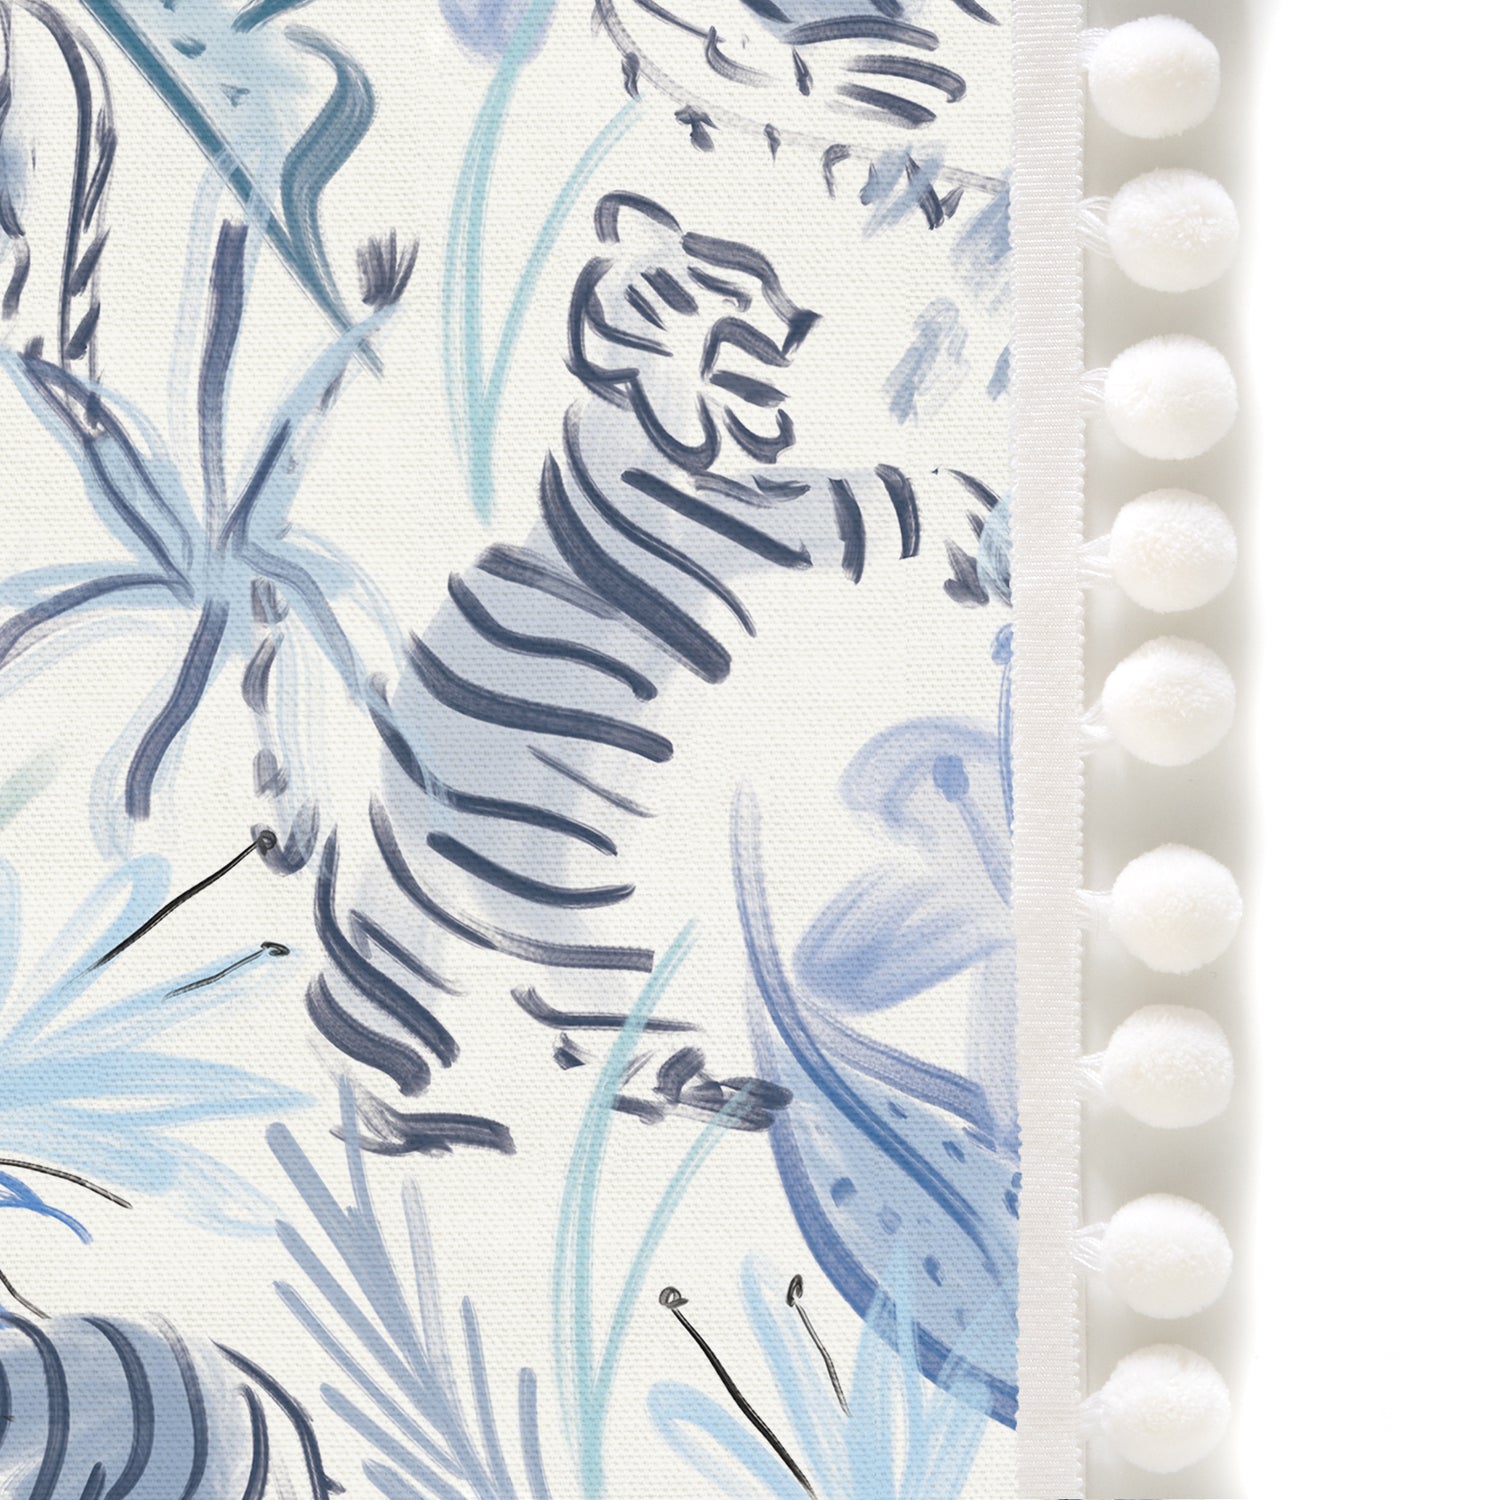 Upclose picture of Frida Blue custom Blue With Intricate Tiger Designcurtain with snow pom pom trim